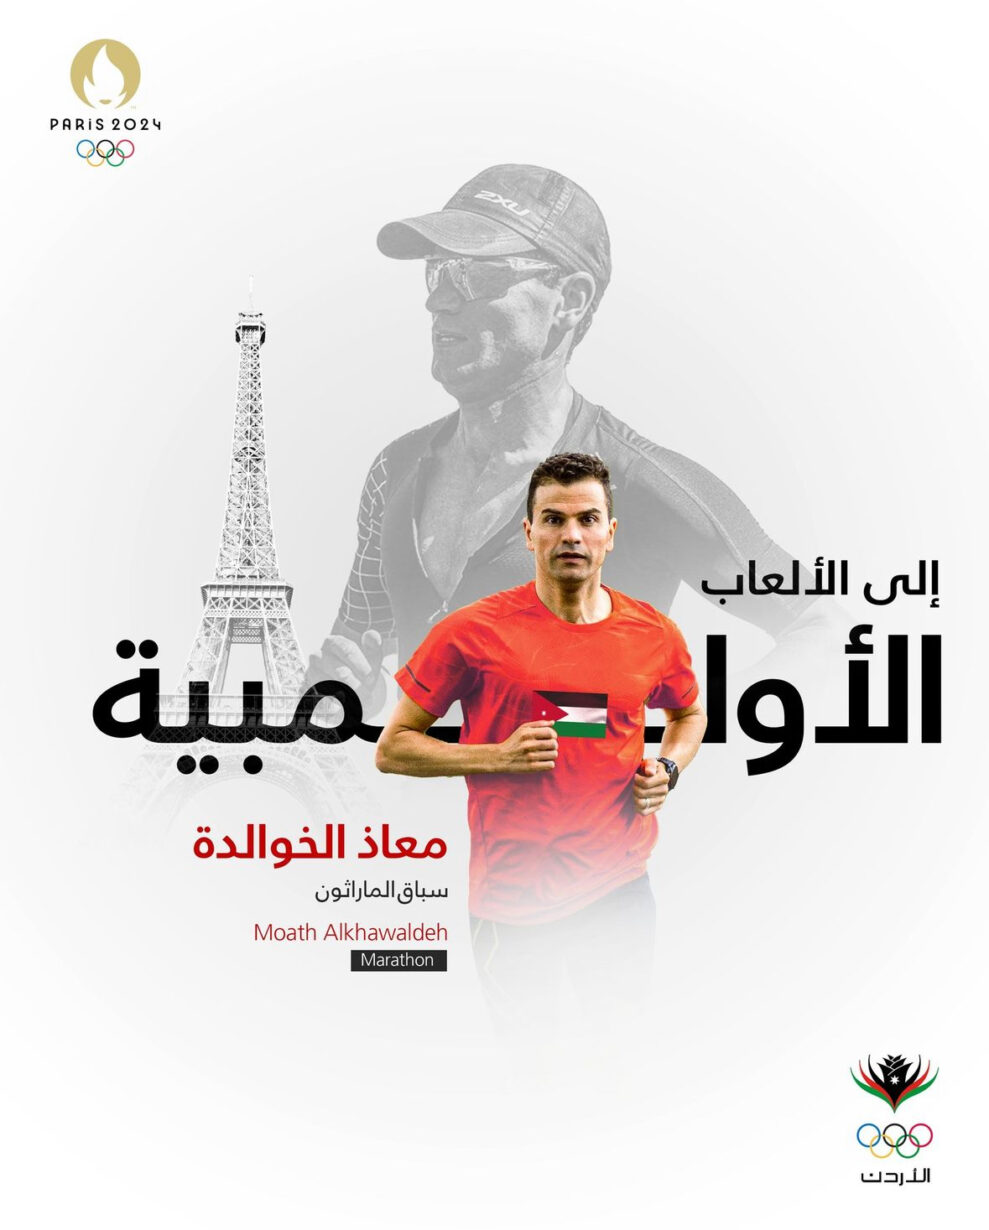 Watch Arab Barometer’s Own Moath Al-Khawaldeh at the 2024 Paris Olympics!